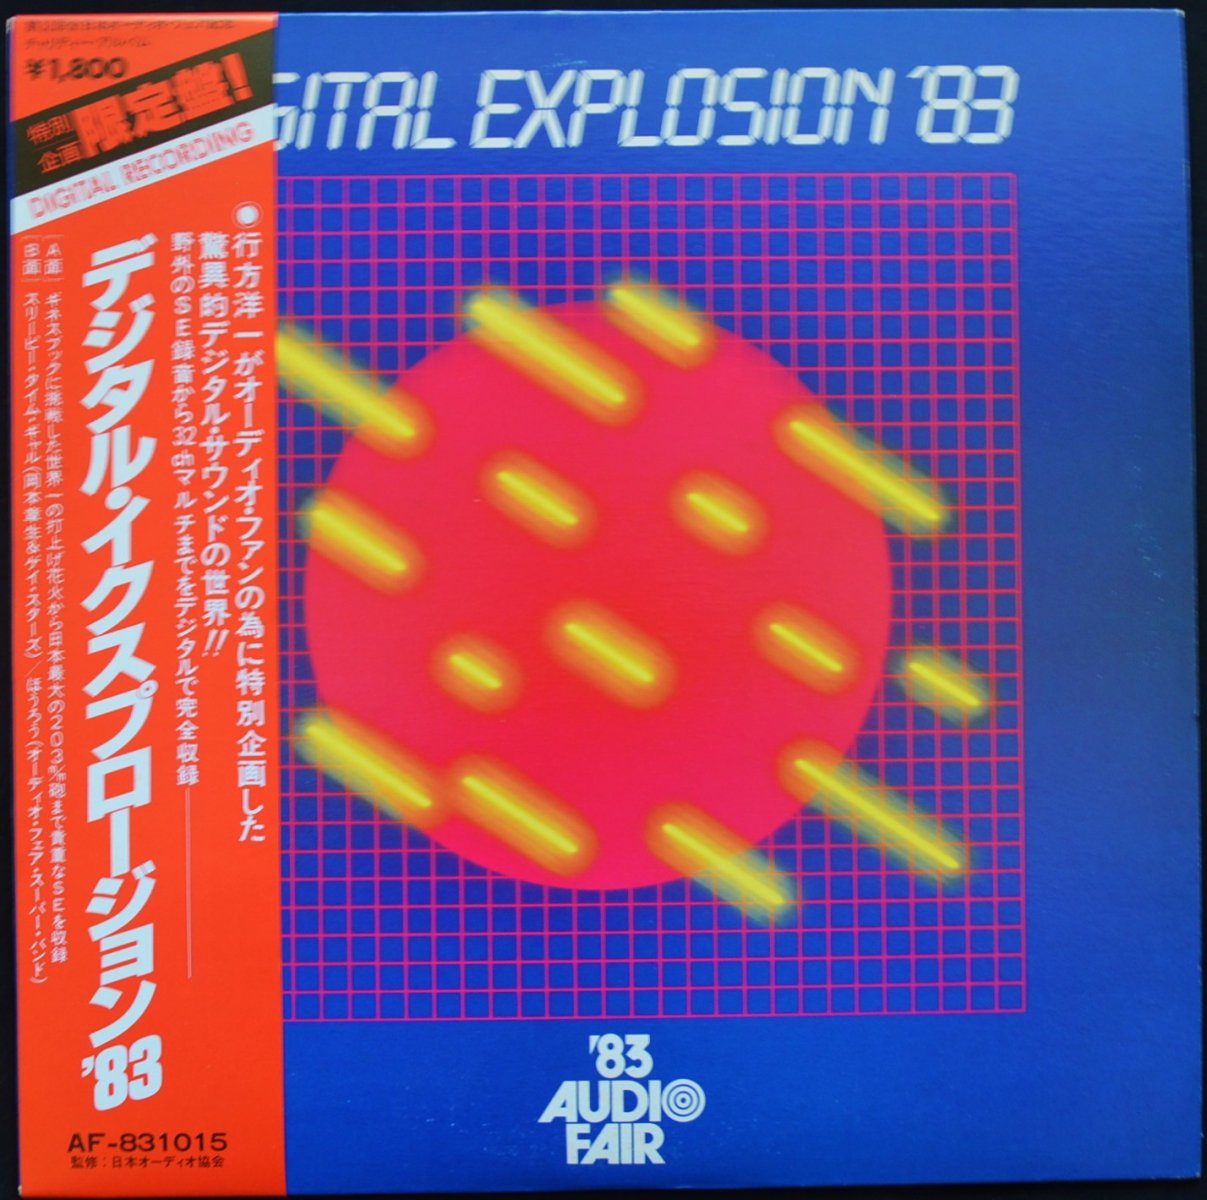 V.A.(オーディオ・フェア・スーパー・バンド...) / ほうろう (デジタル・イクスプロージョン'83 / DIGITAL EXPLOSION '83) (LP)